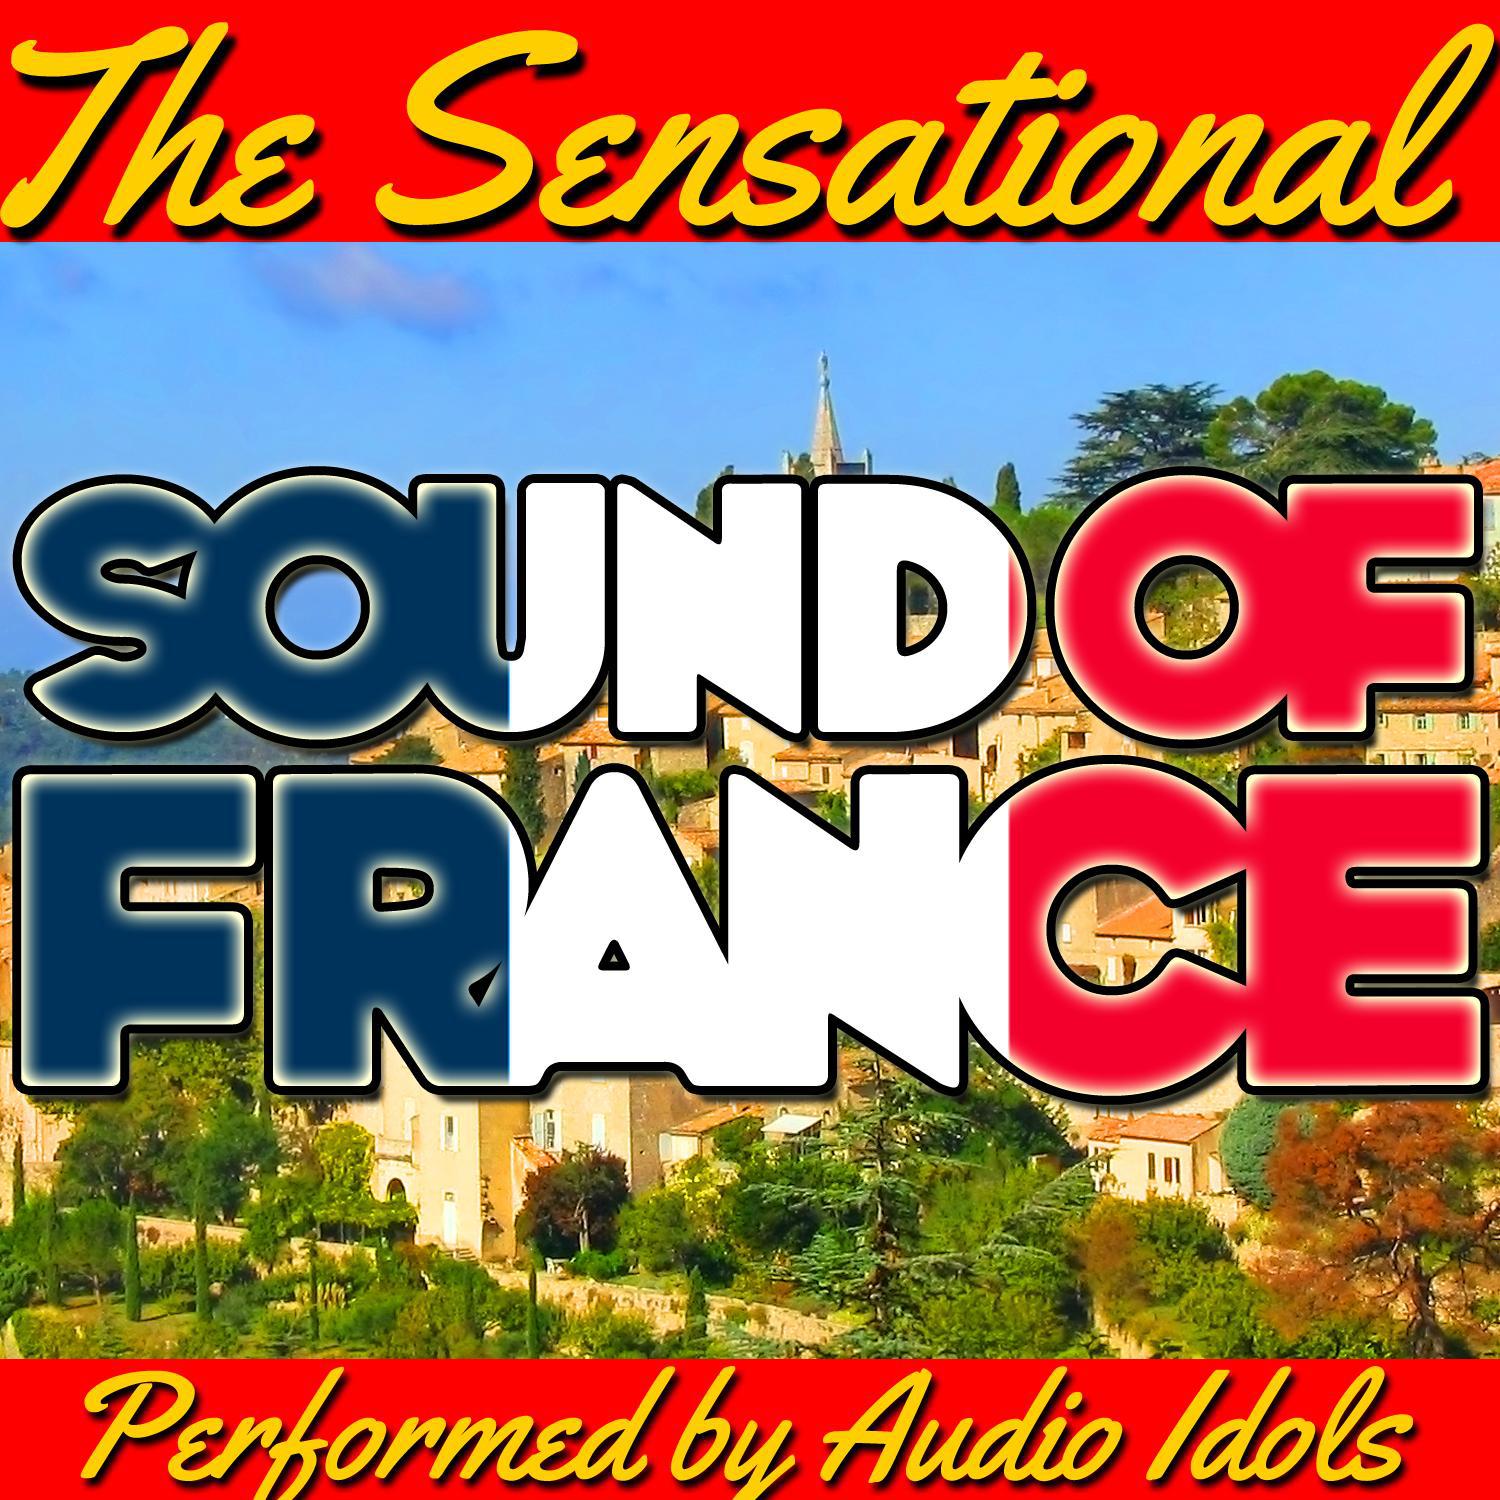 The Sensational Sound of France